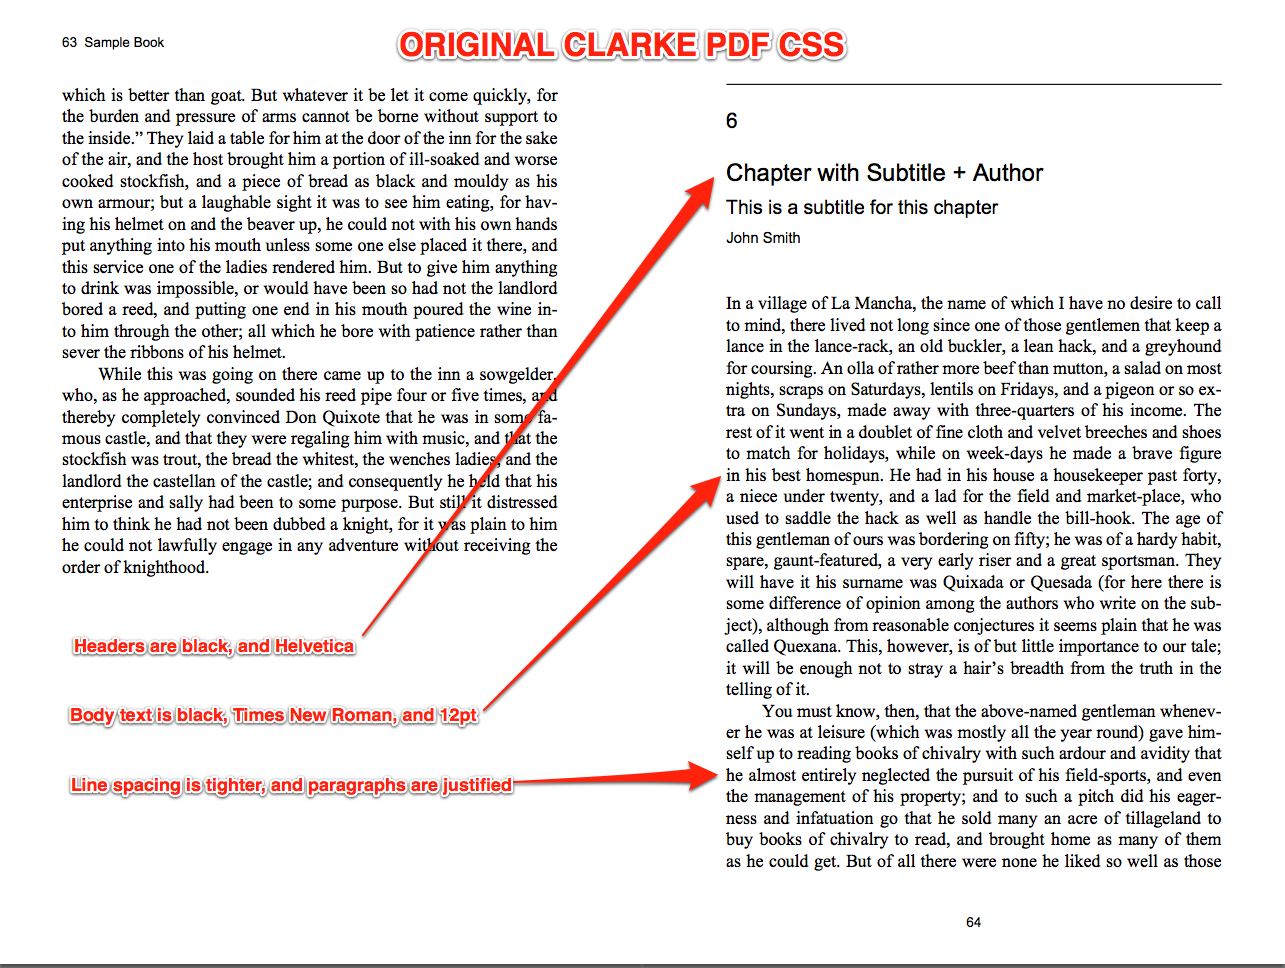 Clarke PDF (Original Css)